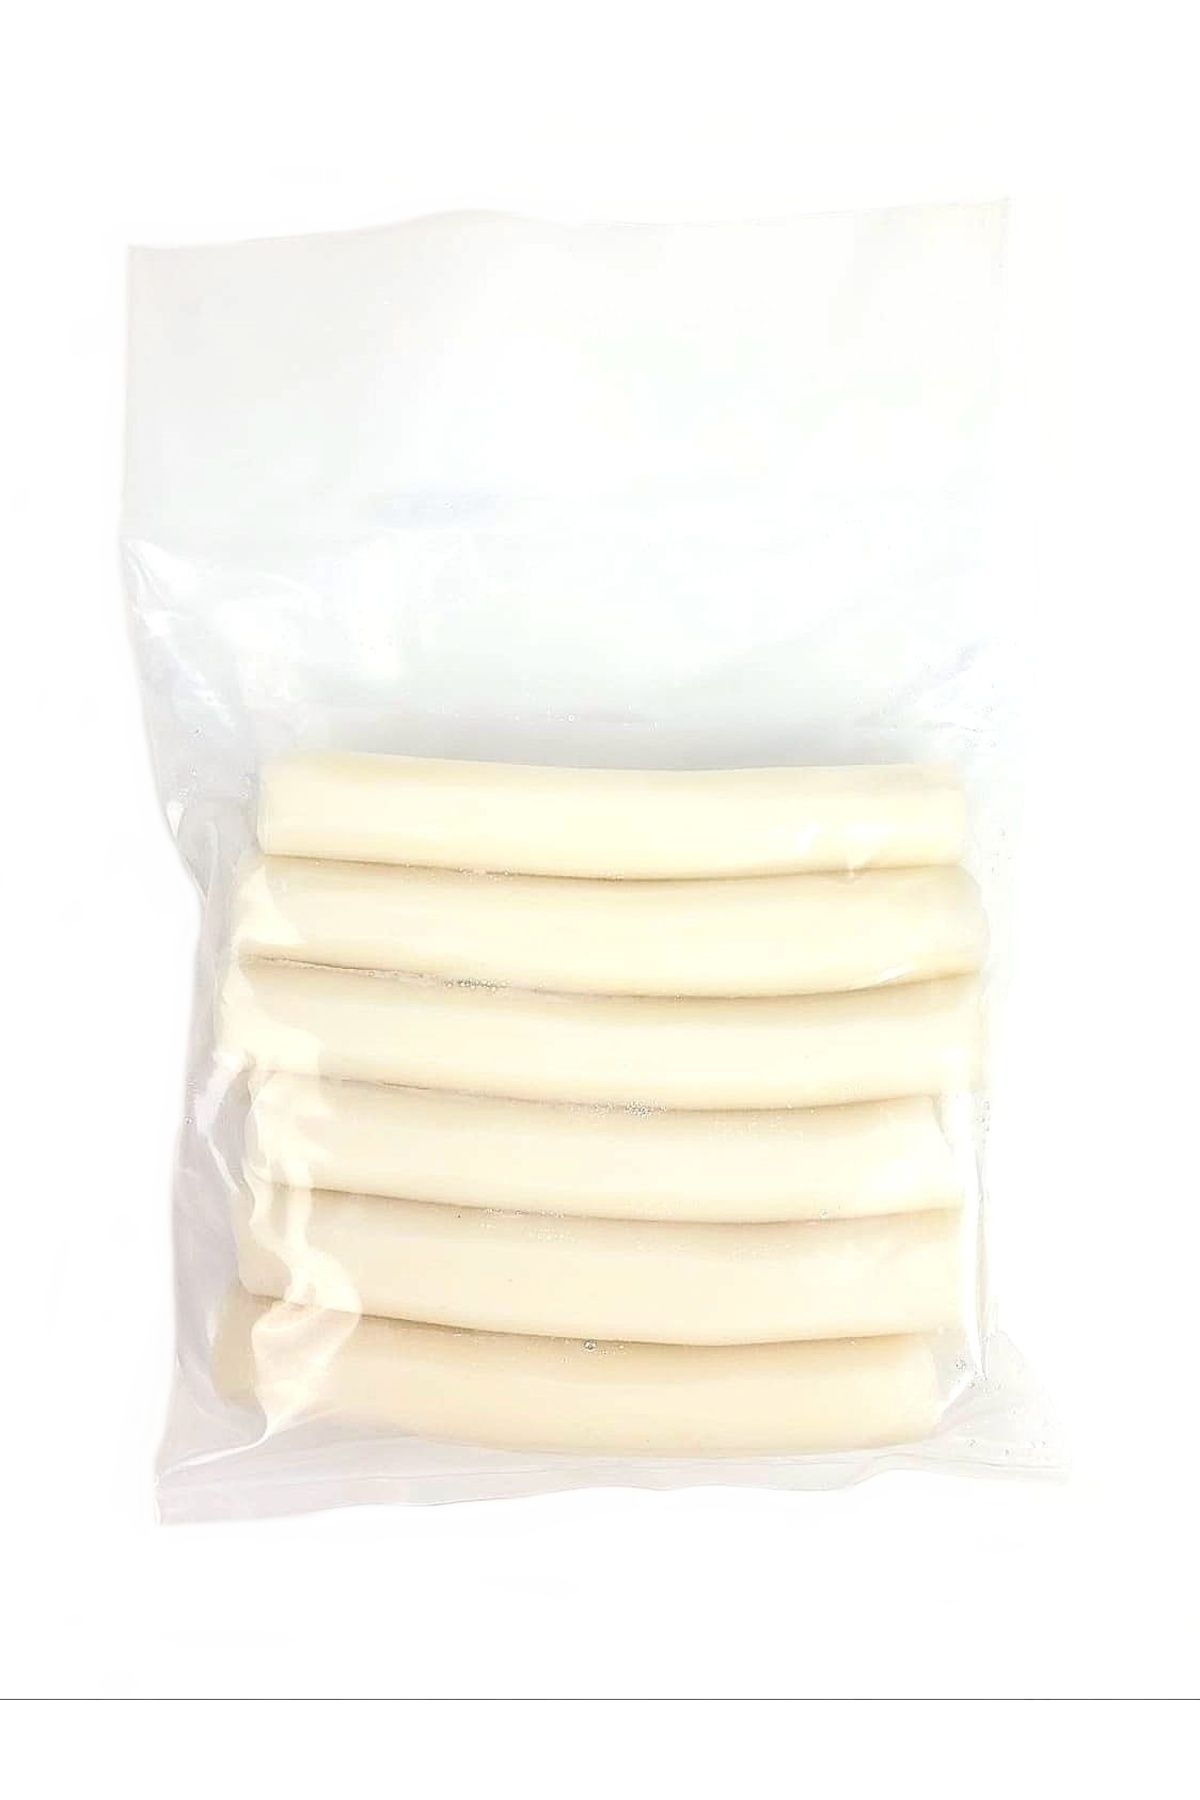 SMART MARKET Garaetteok Tteokbokki Uzun Kalın Kore Pirinç Keki 1kg